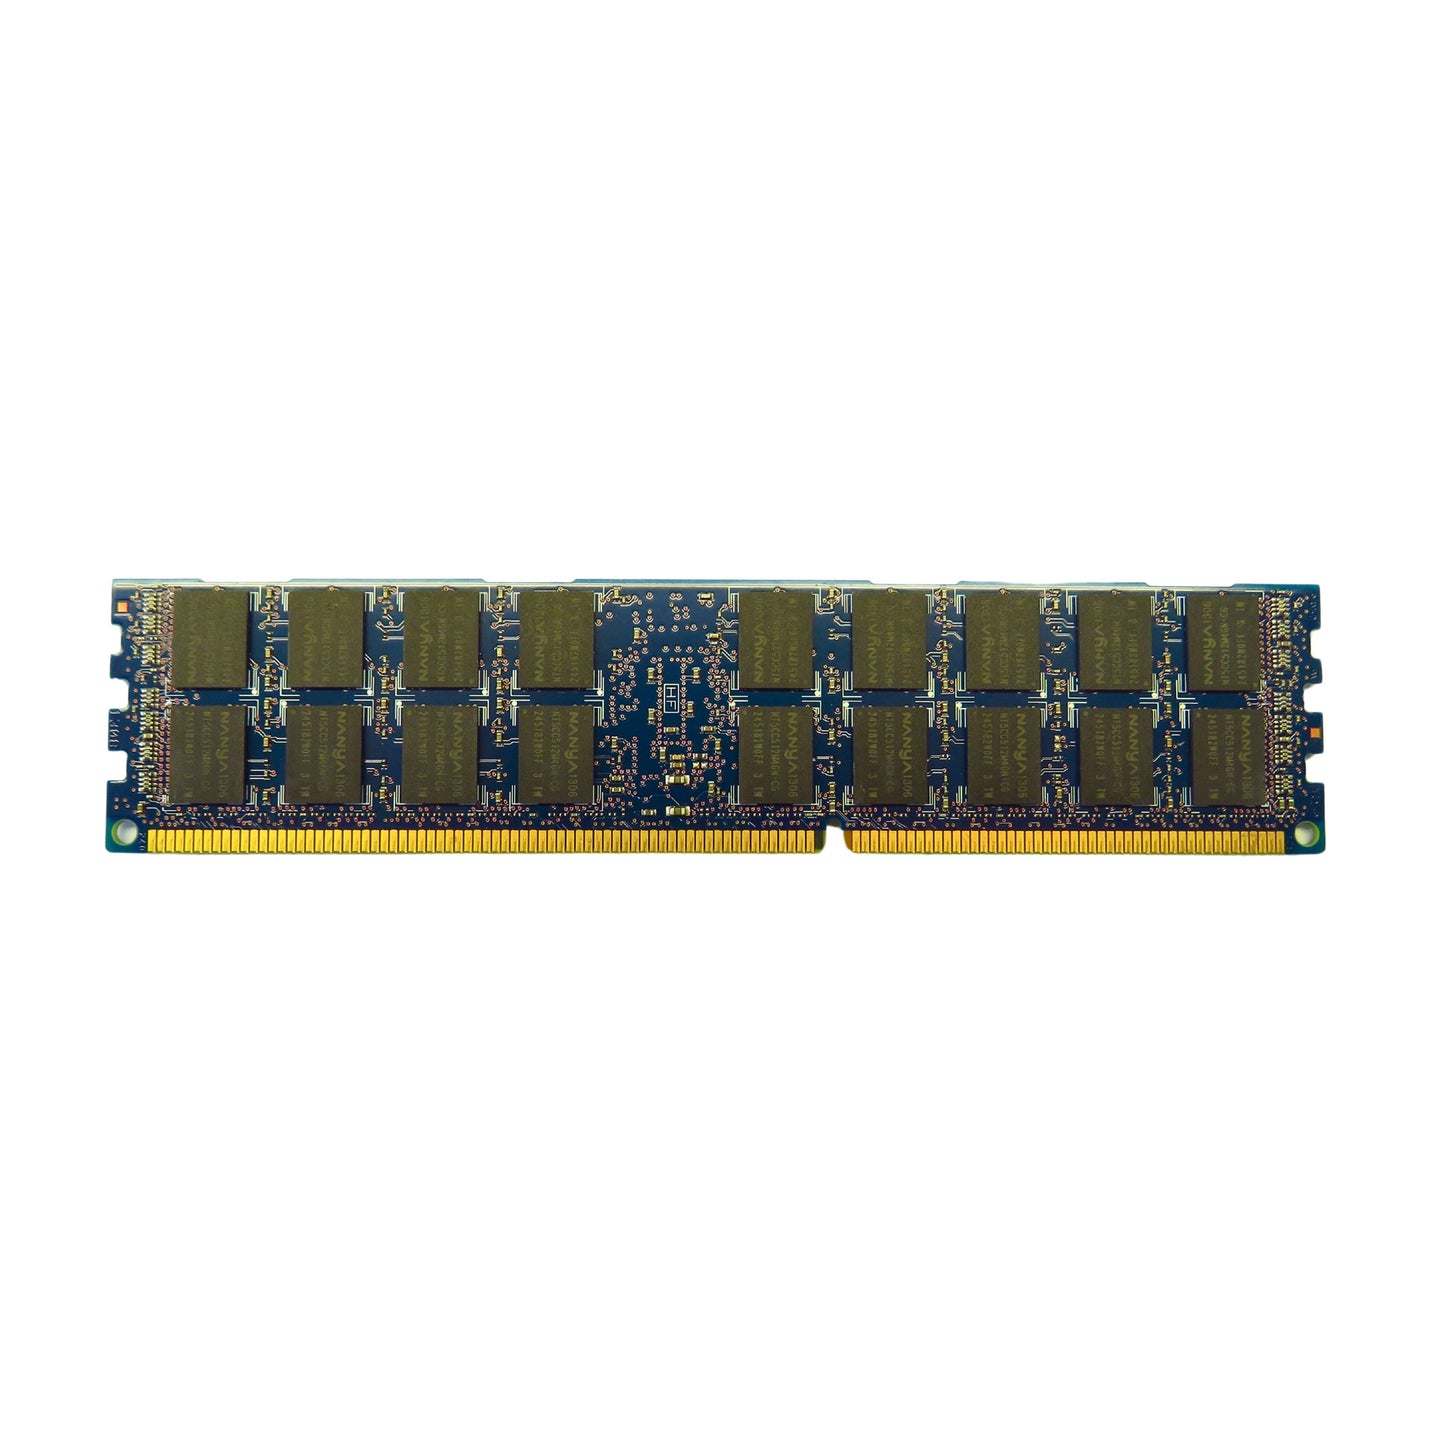 HP 647650-071 8GB 2Rx4 PC3L-10600R 1333MHz DDR3 ECC RDIMM Server Memory (Refurbished)